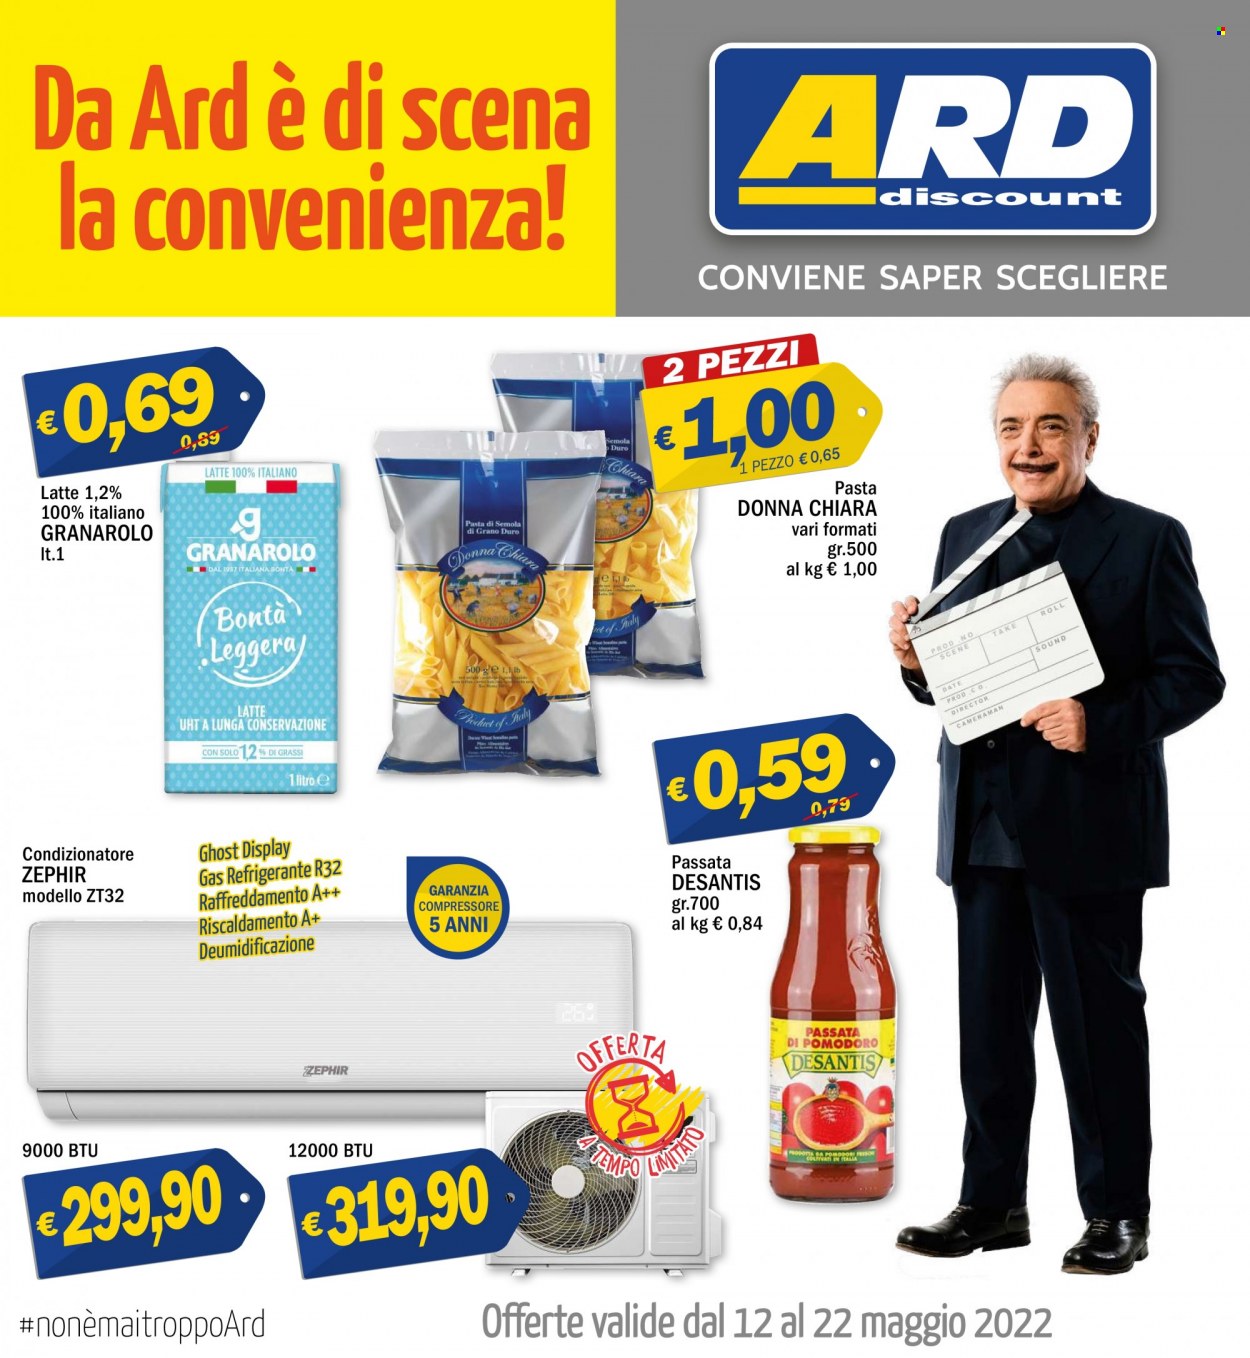 Volantino ARD Discount - 12.5.2022 - 22.5.2022.